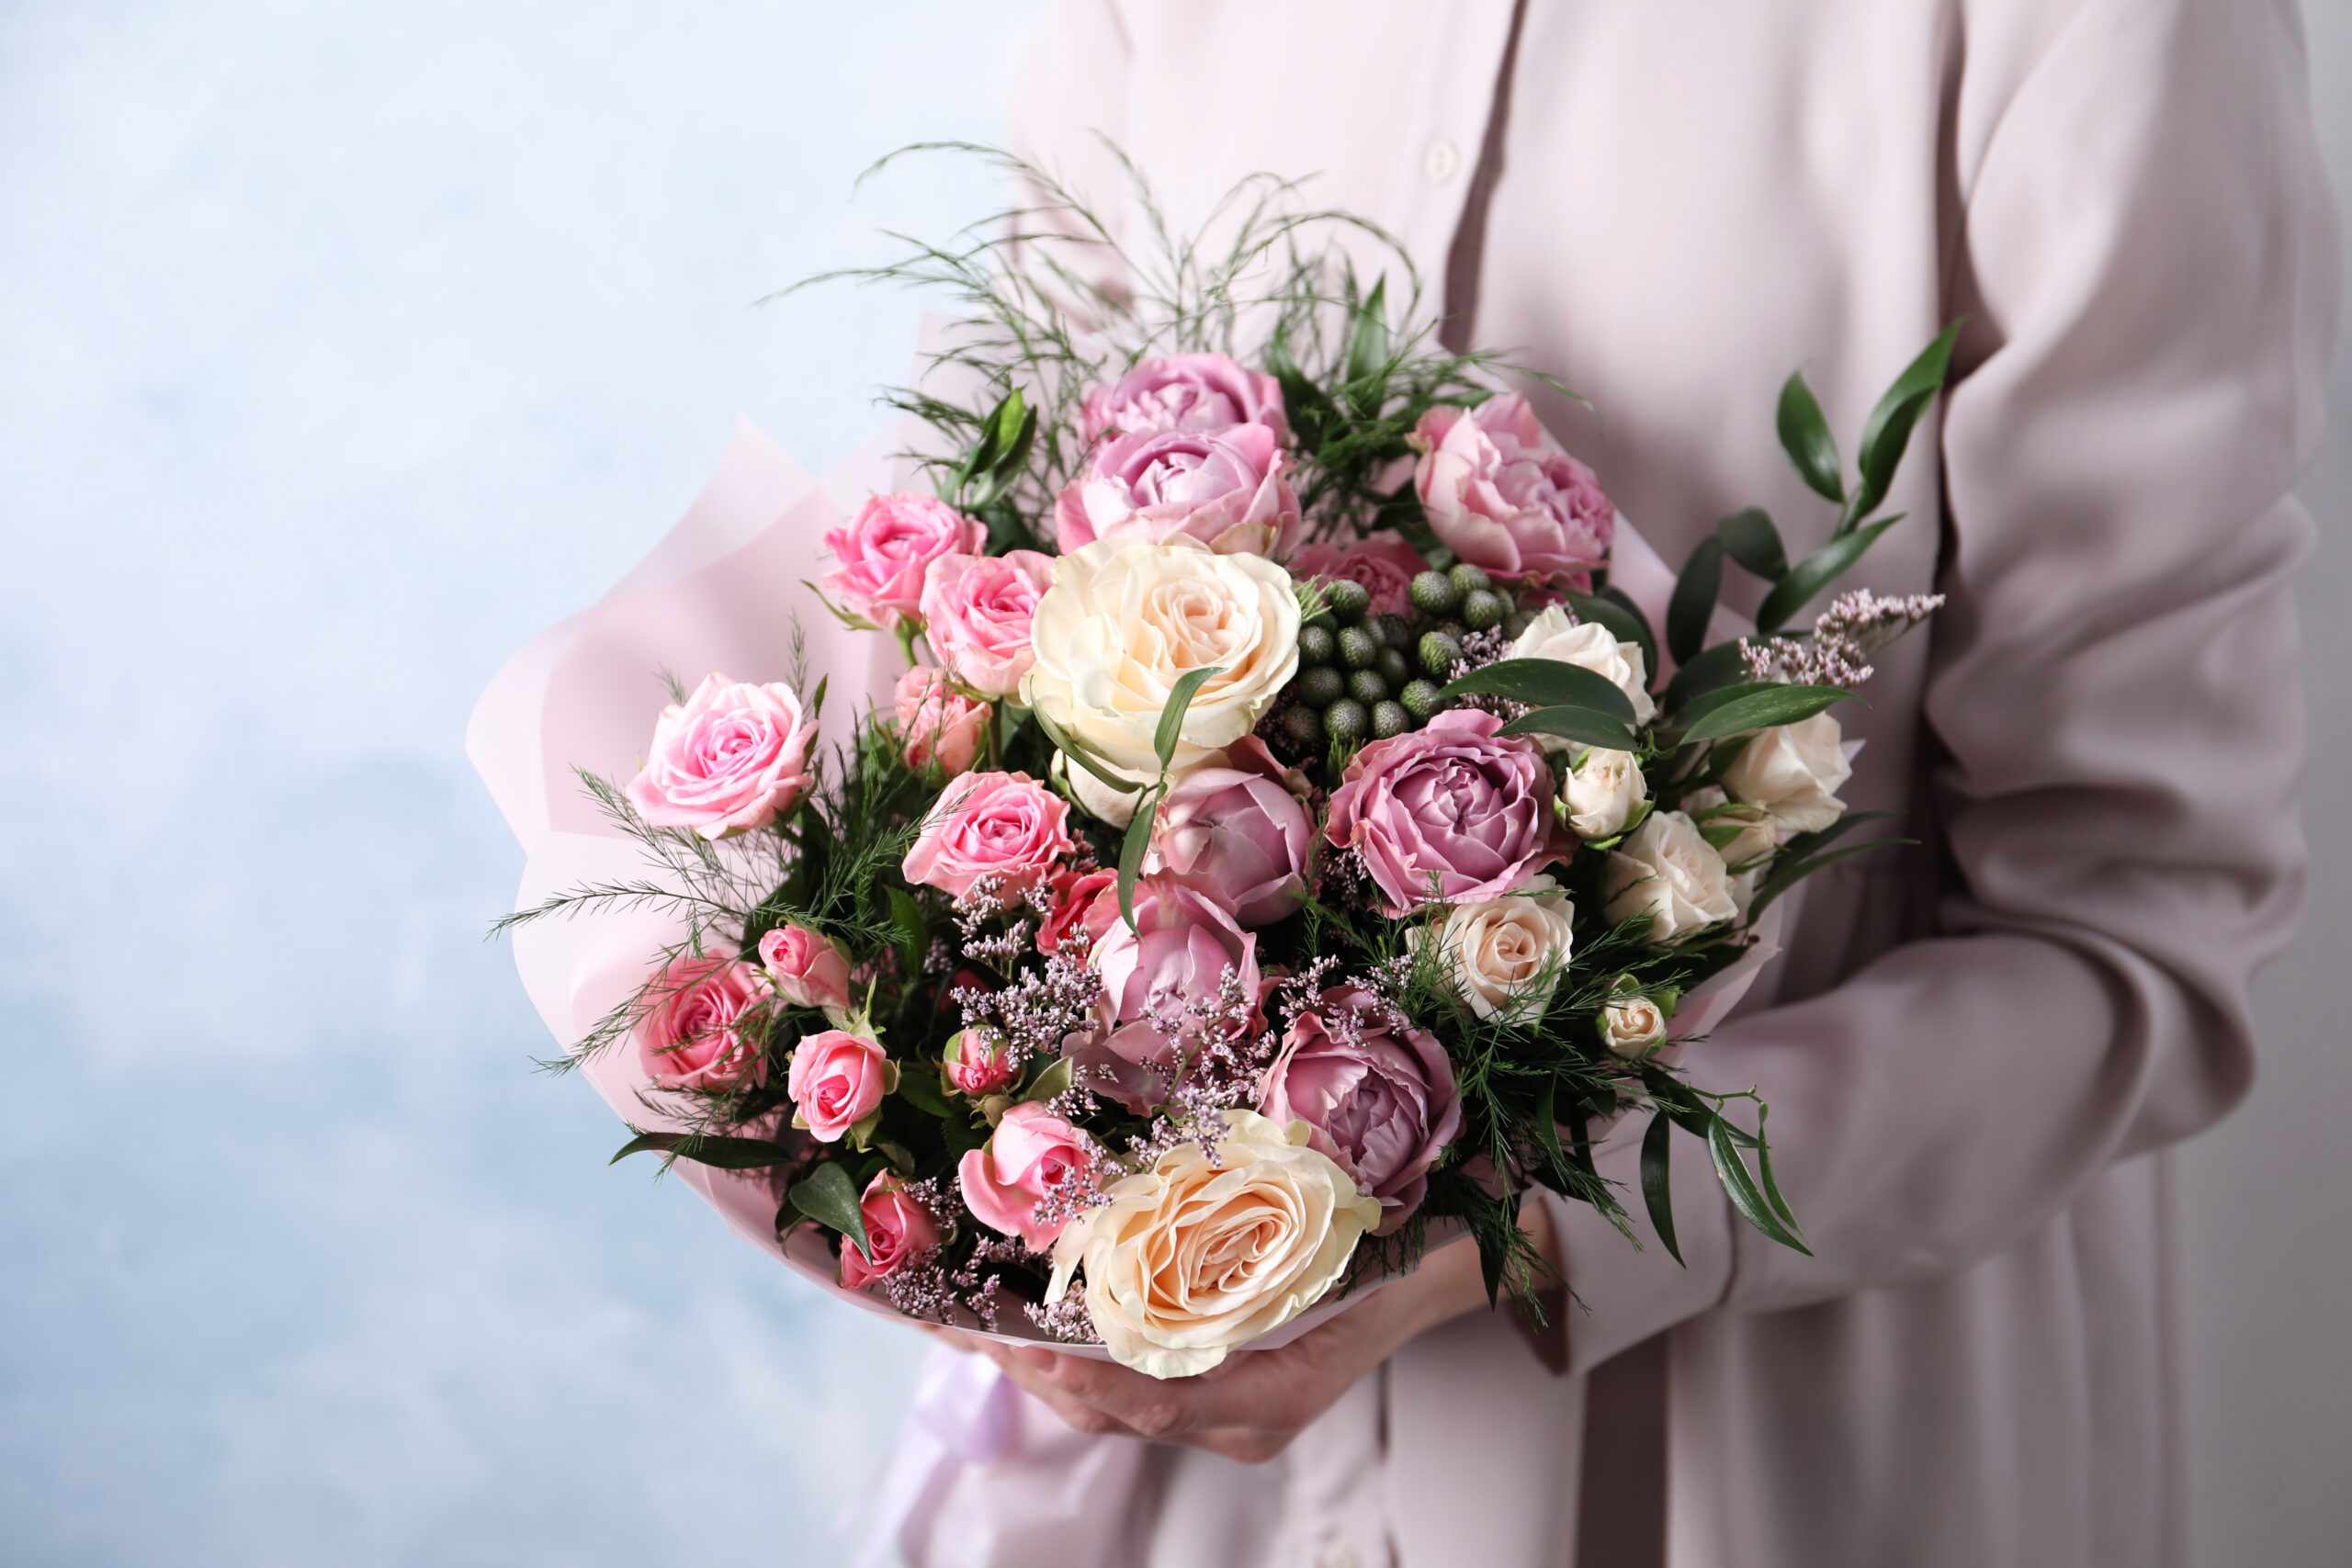 Online flower bouquet delivery saudi arabia - Gulfflora